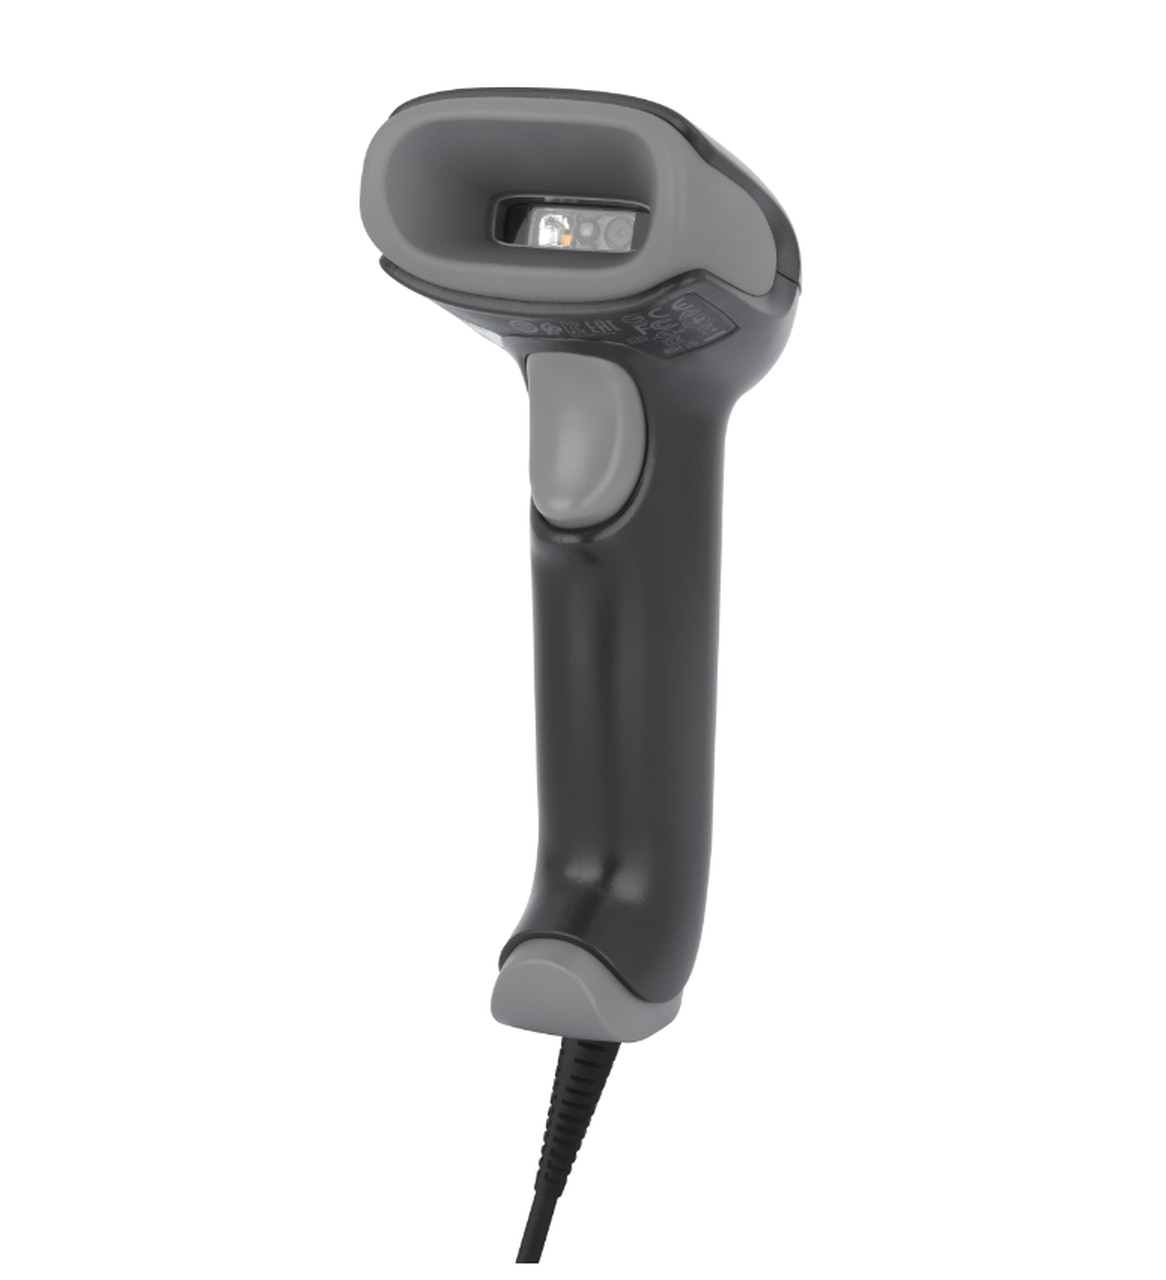 HONEYWELL Voyager Extreme Performance 1470g - USB Kit - Barcode-Scanner - Handgerät - decodiert - US